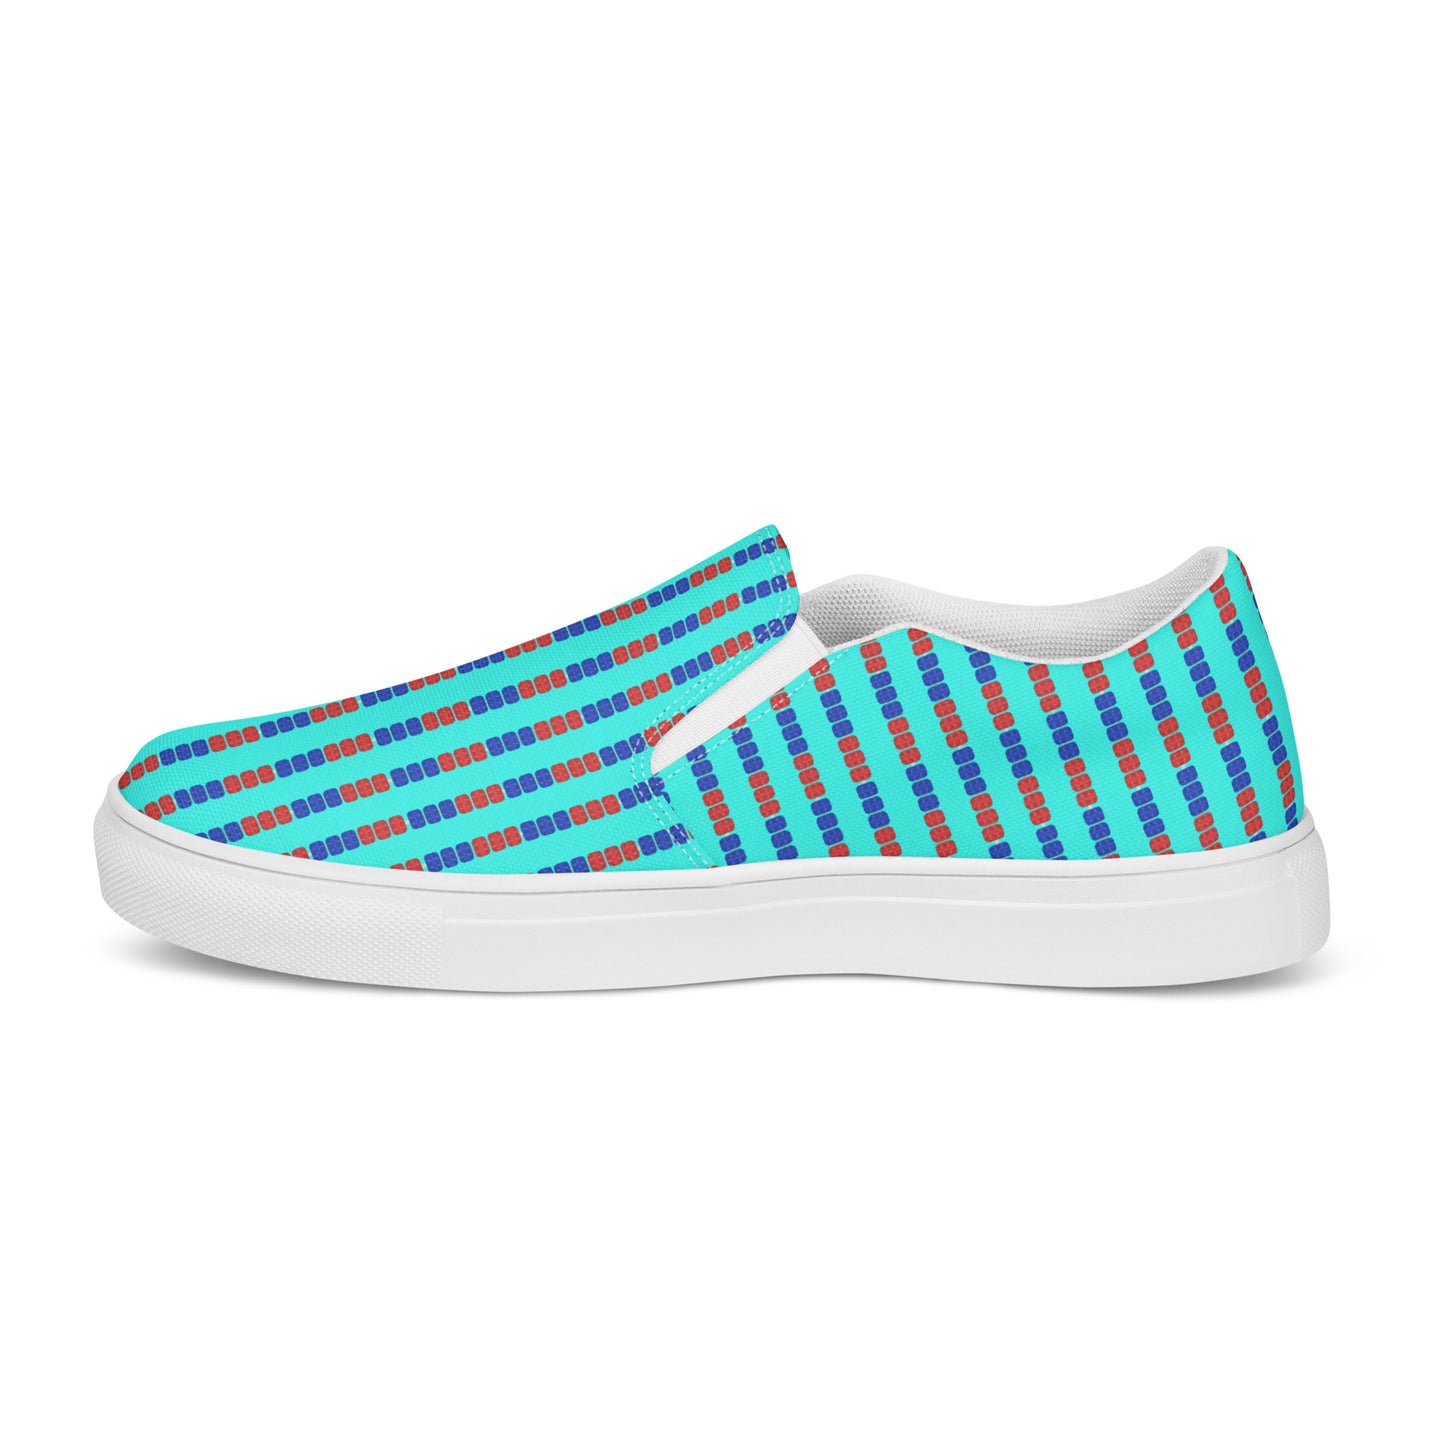 Swim Lane Stripes- Women’s slip-on canvas shoes